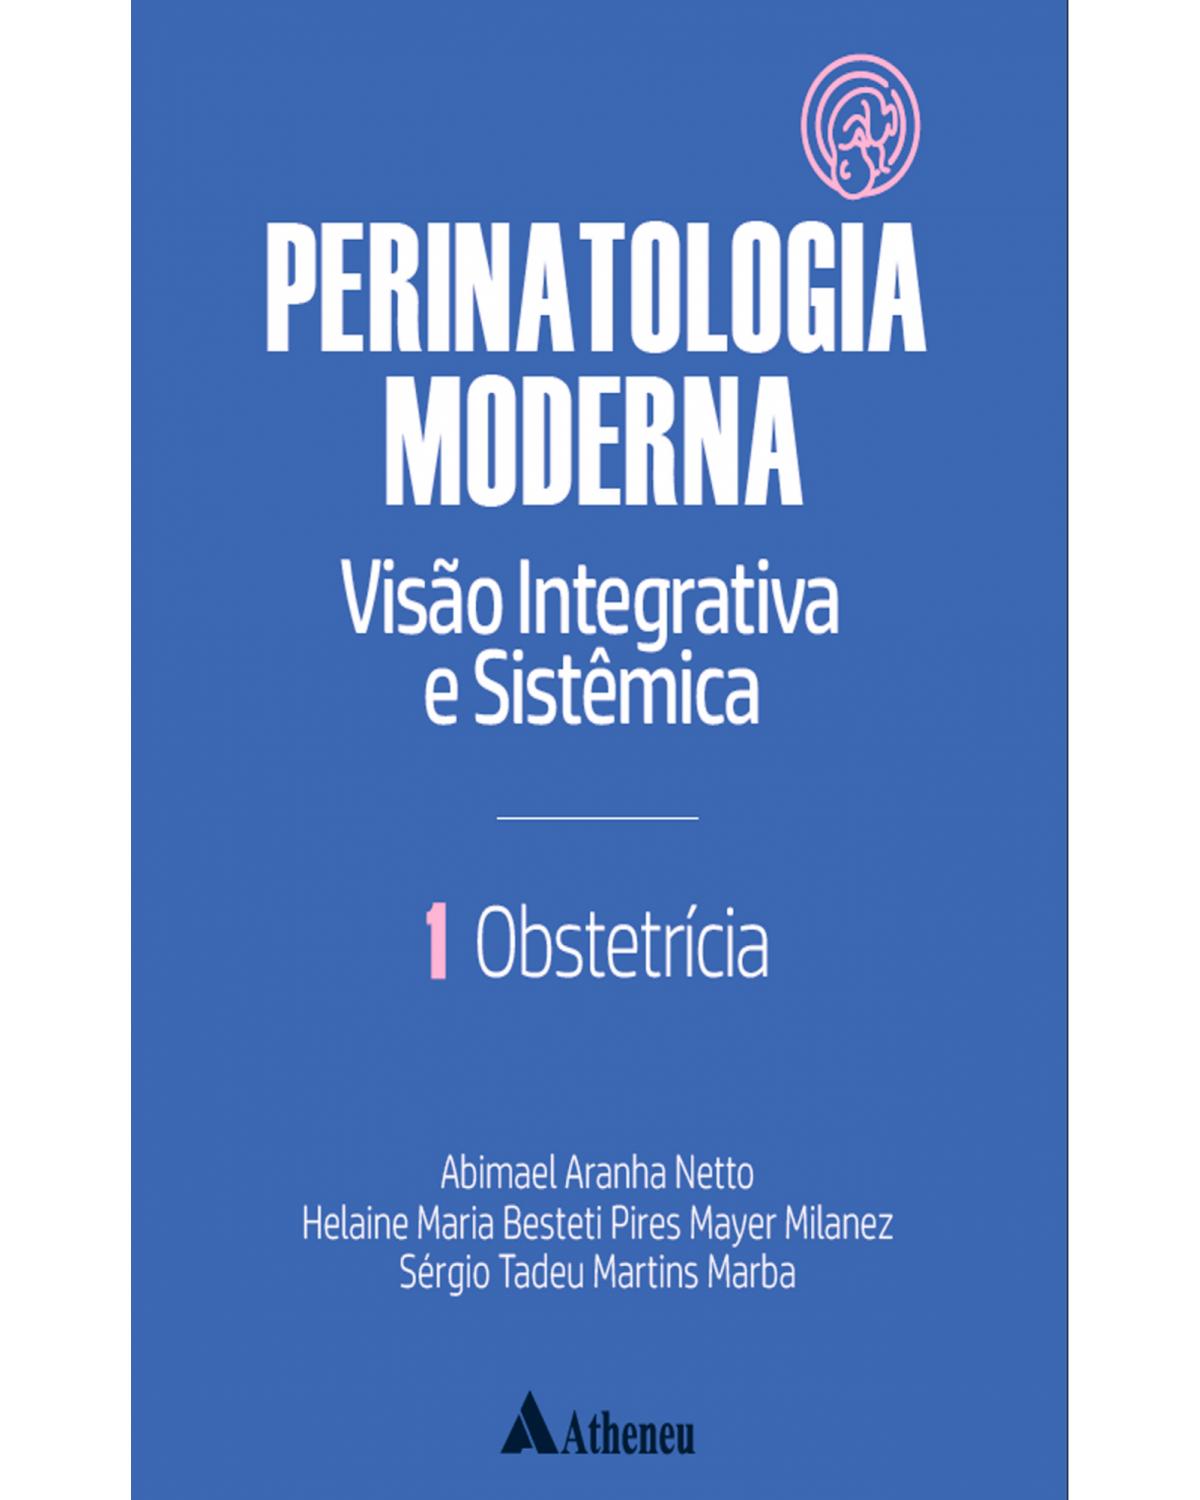 Obstetrícia - Perinatologia moderna: visão integrativa e sistêmica - vol. 1 - Volume 1:  - 1ª Edição | 2022